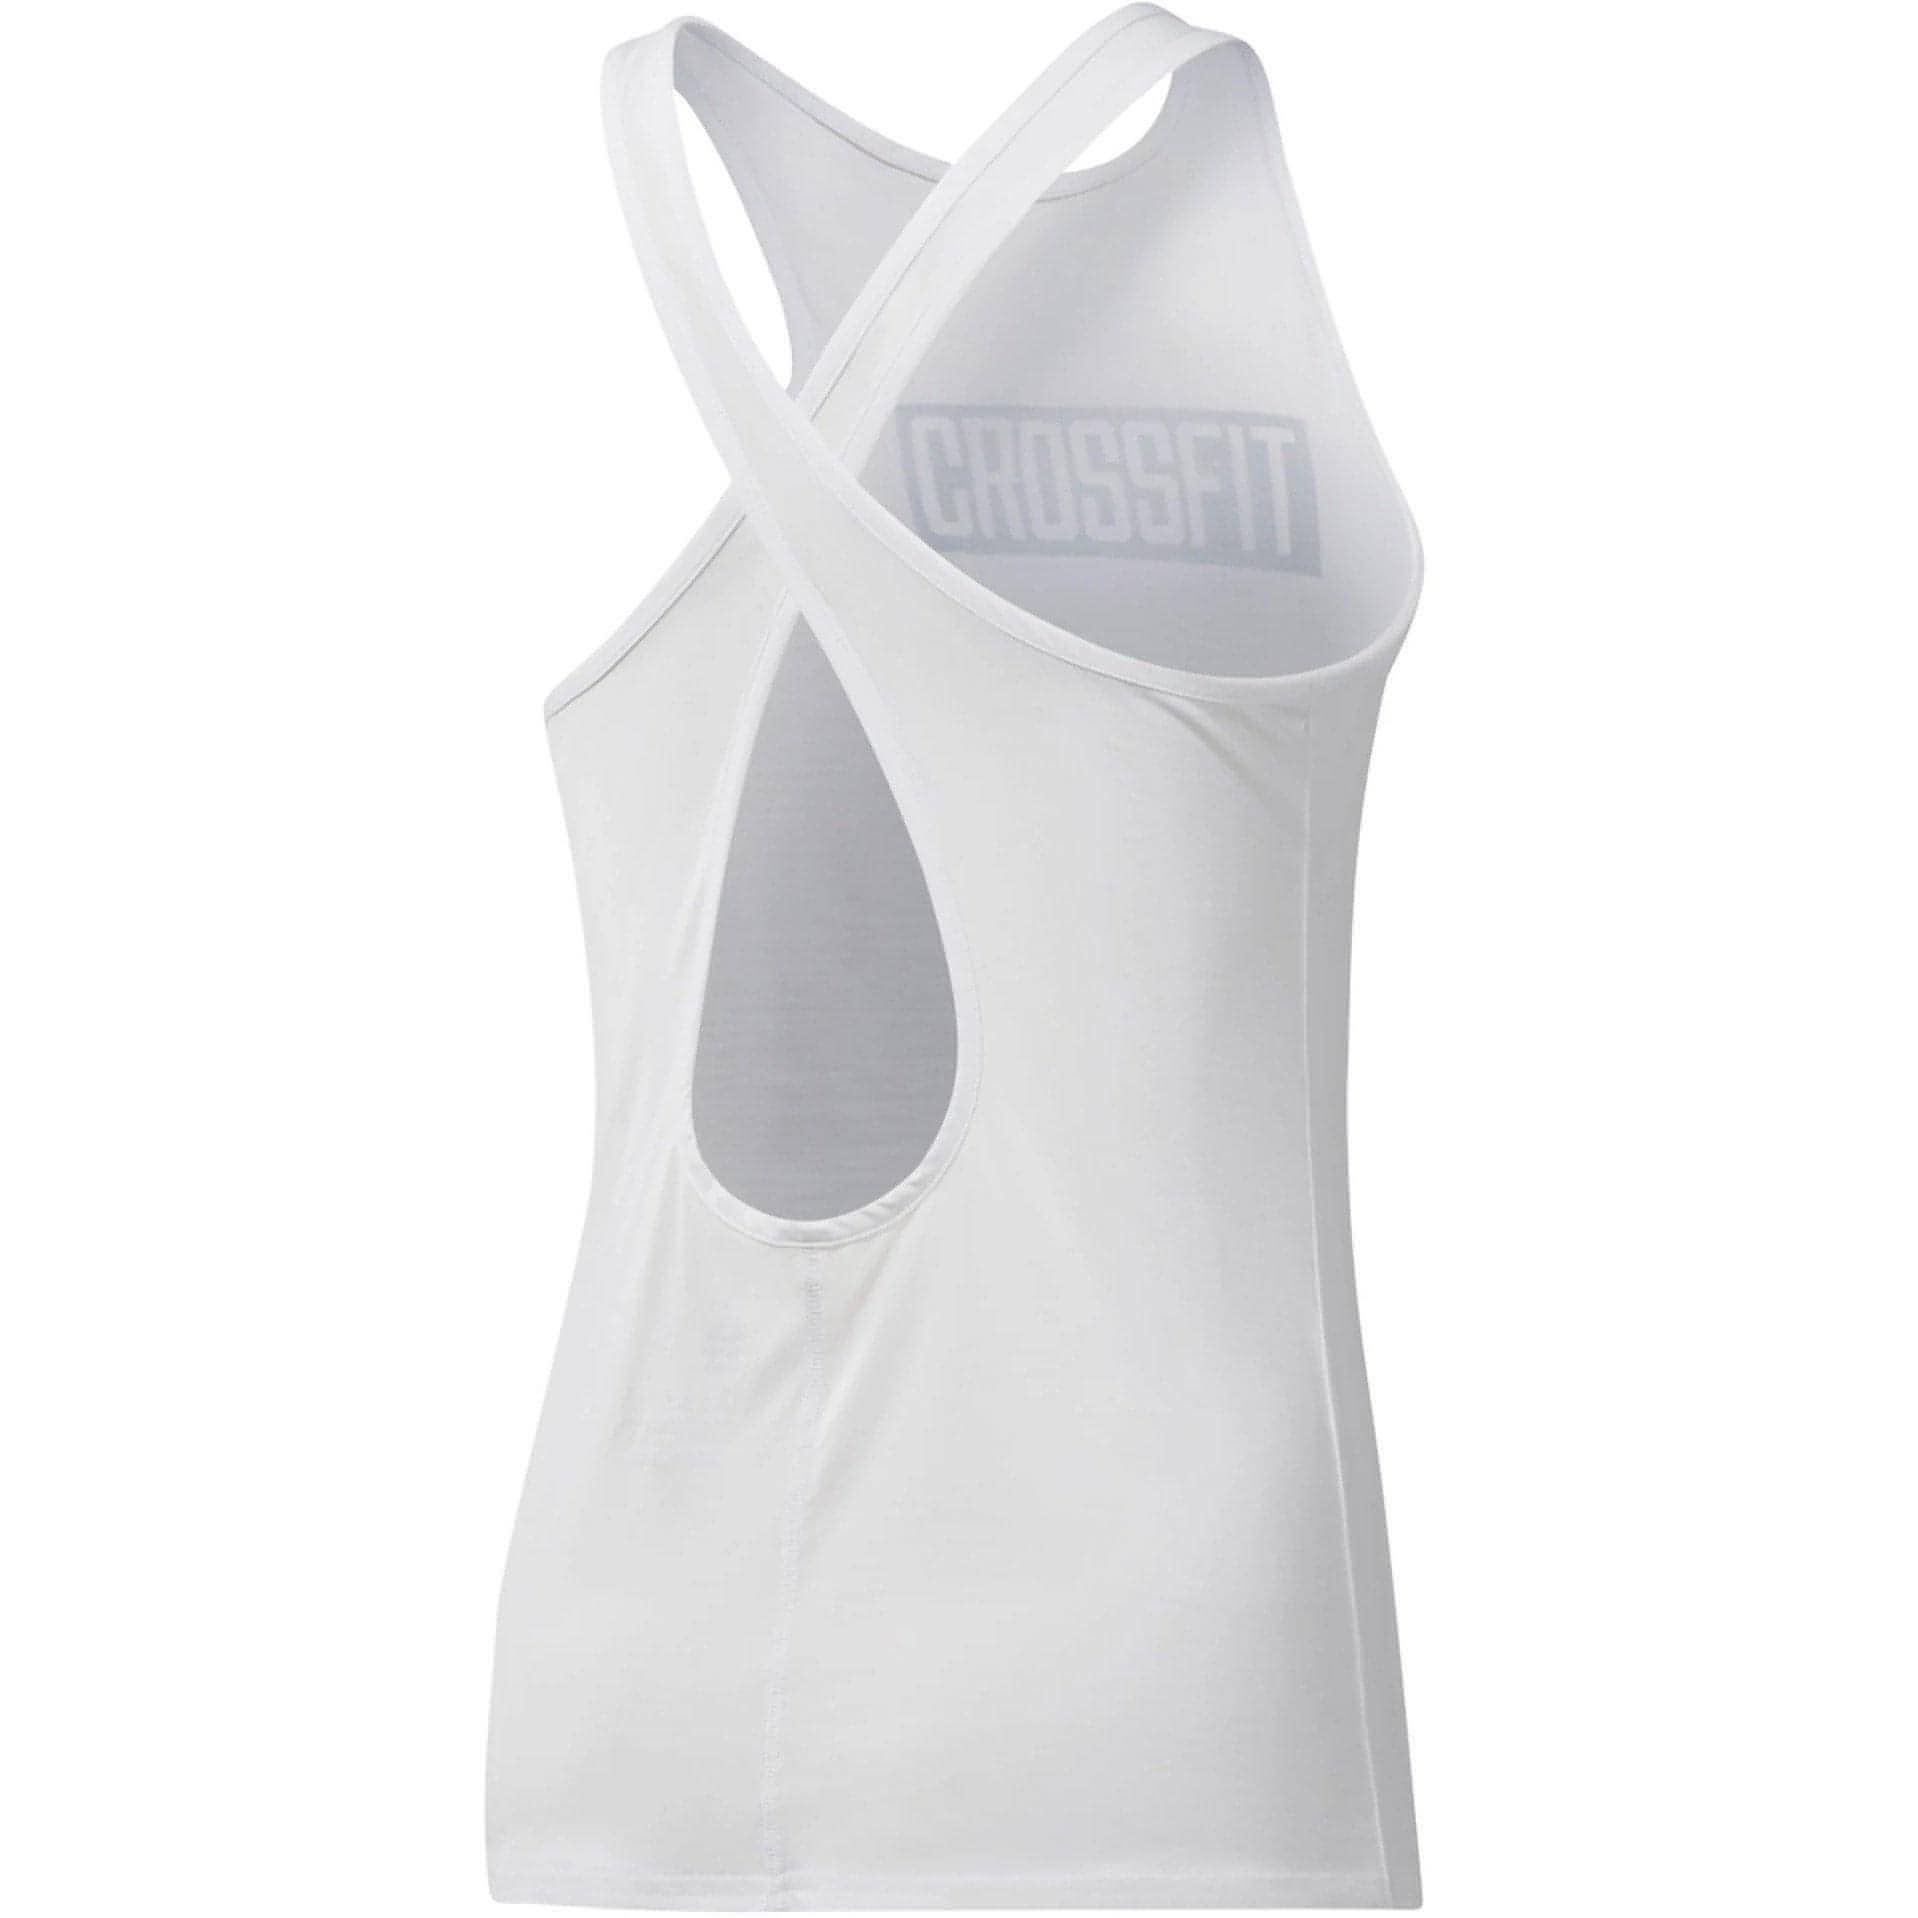 Reebok Crossfit Activchill Womens Training Vest Tank Top - White - Start Fitness